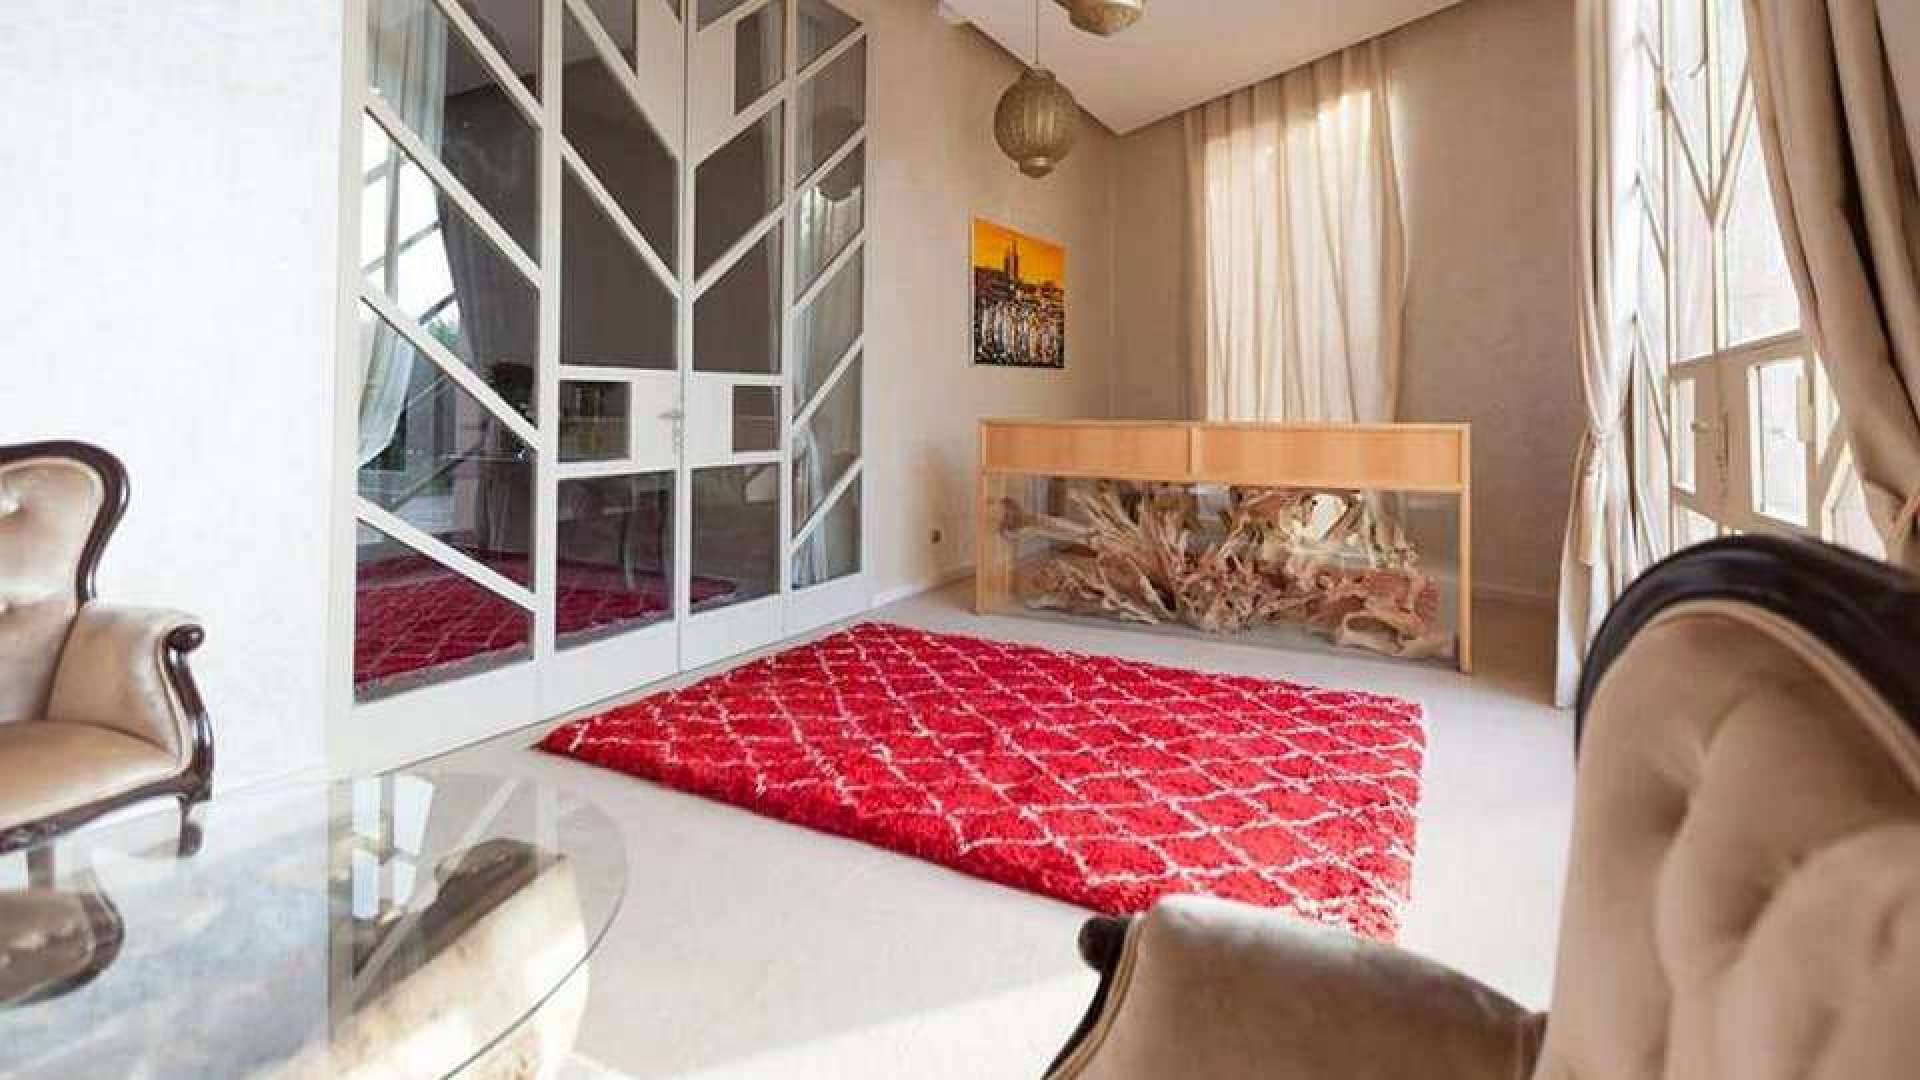 Location de vacances,Villa,Location de vacances Villa de Luxe 7 suites à proximité du Golf Royal de Marrakech,Marrakech,Sidi Abdellah Ghiyate